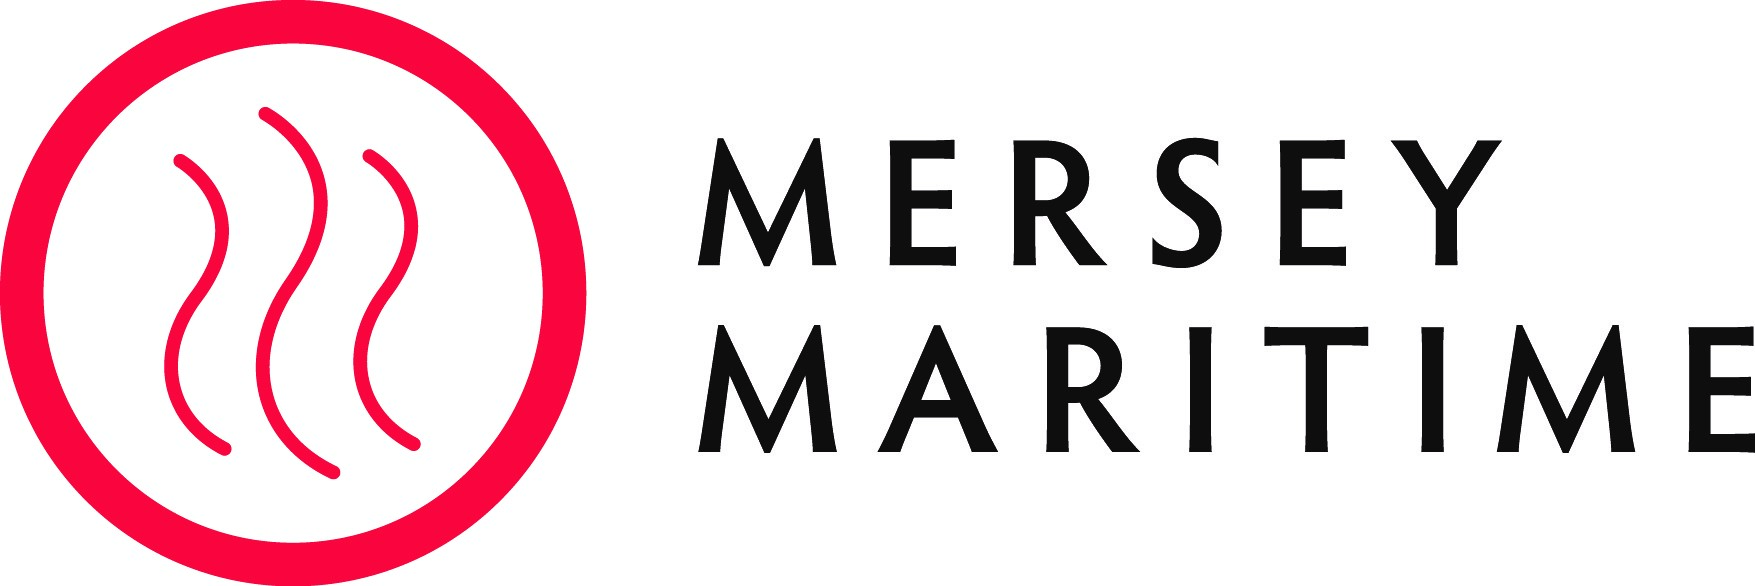 Clear Logo - Mersey Maritime MM Clear Logo - Mersey Maritime